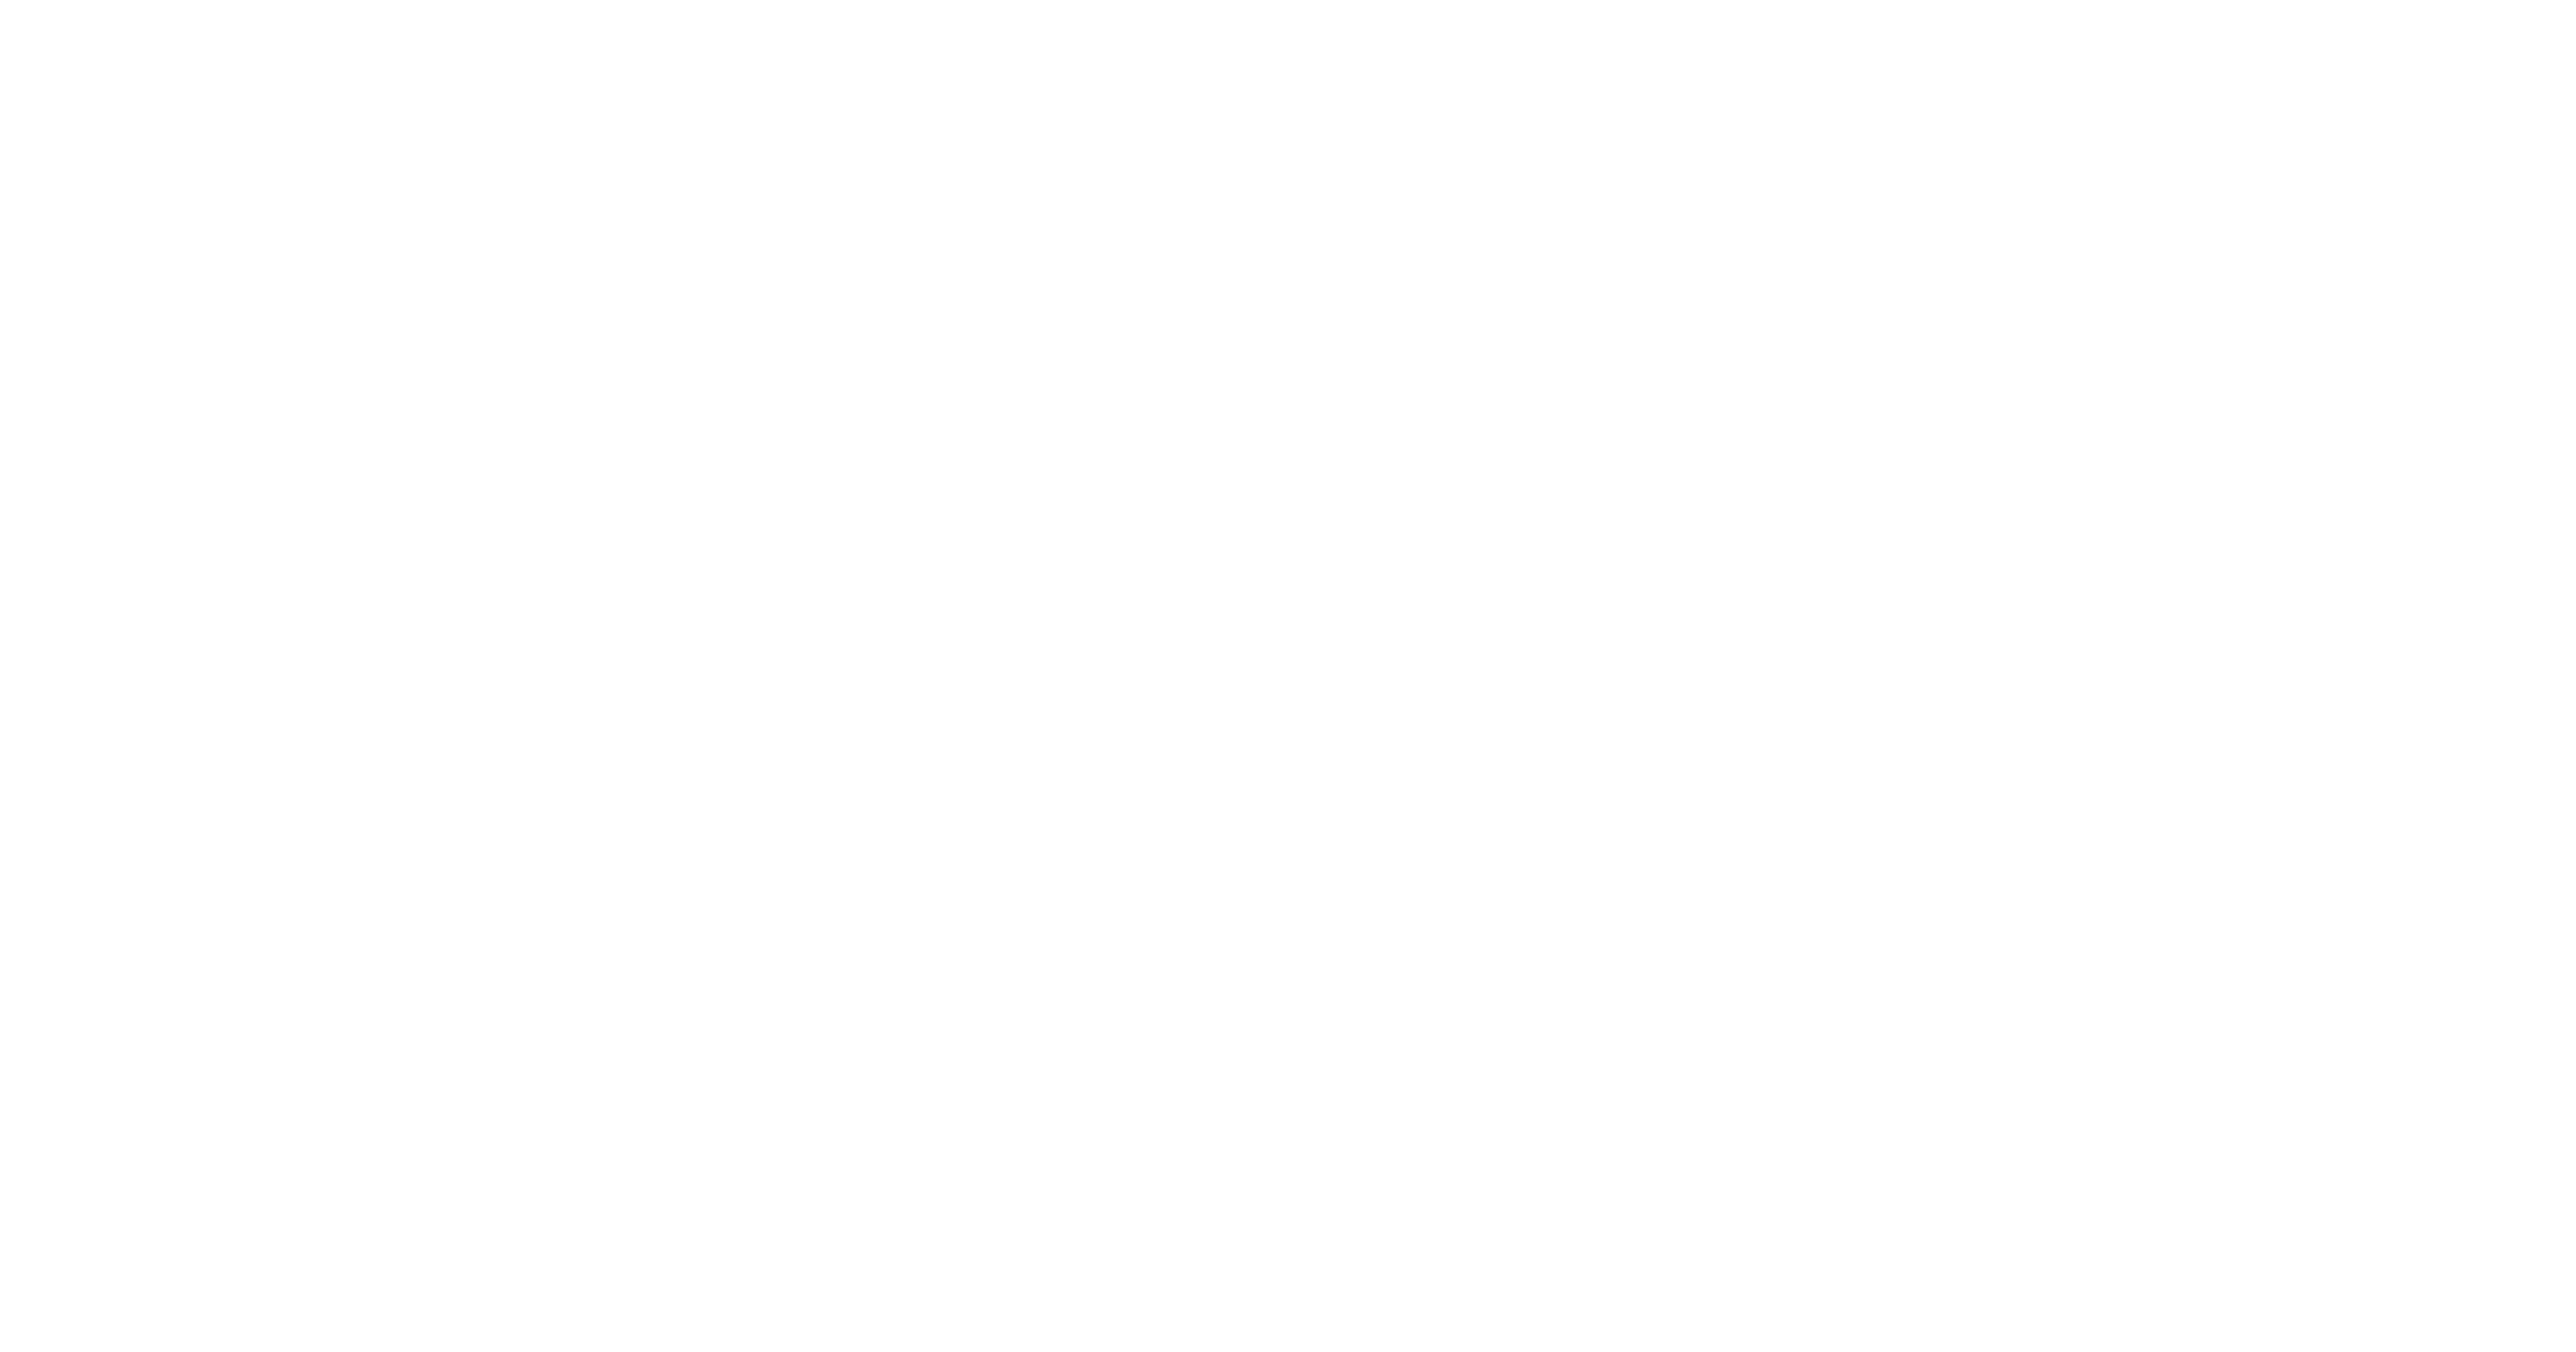 2022-Heliolytics-NEW LOGO-white-01